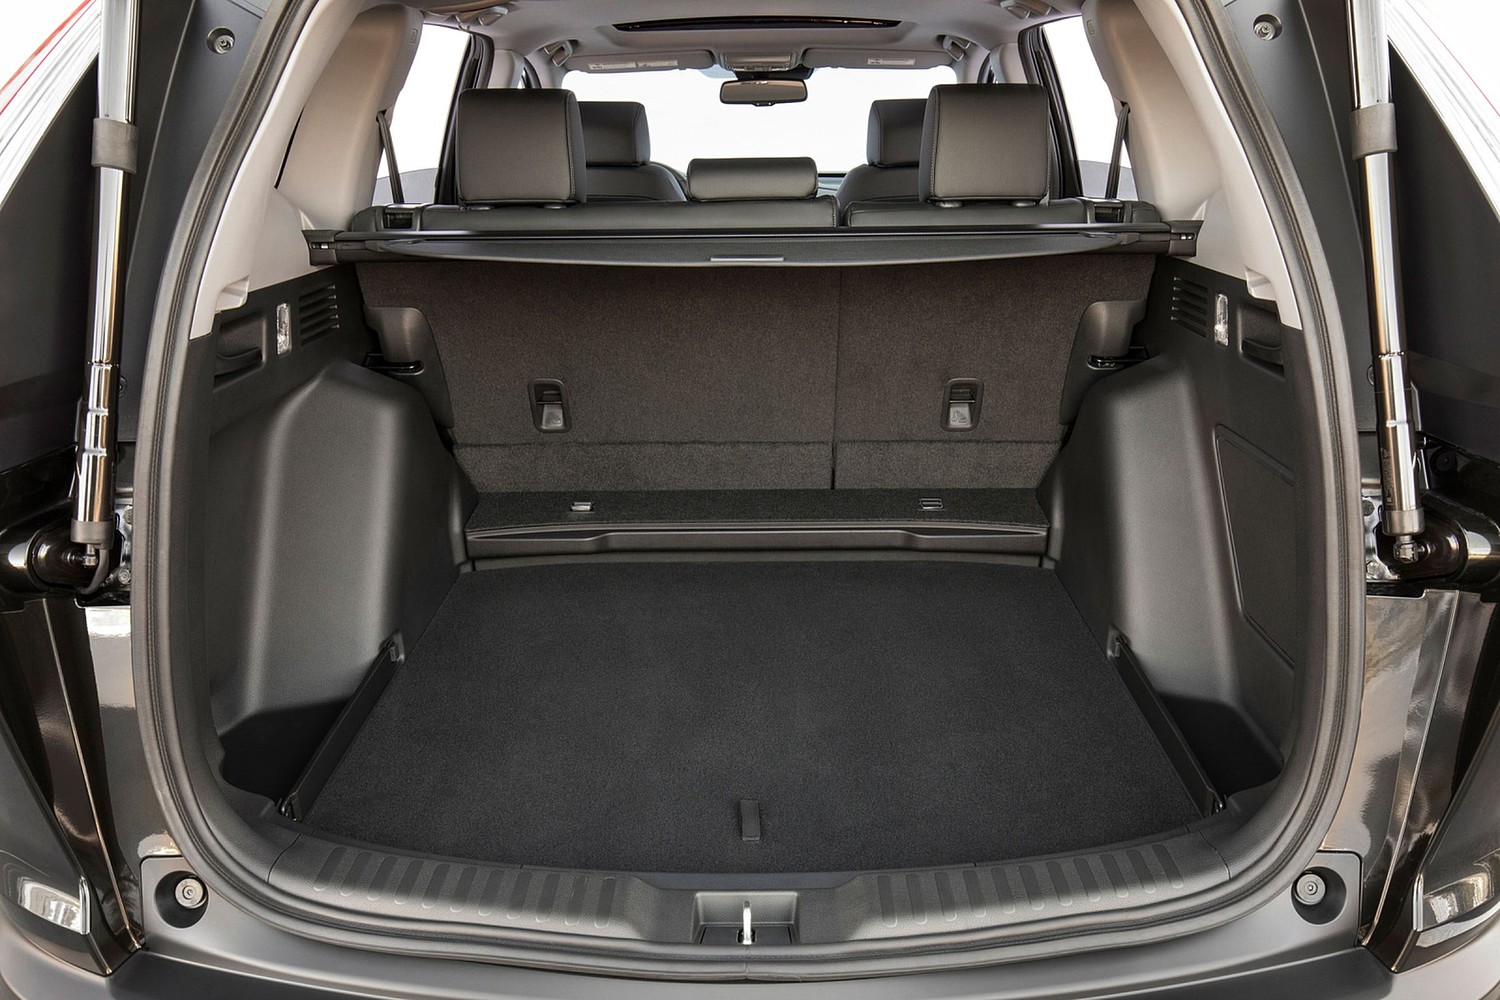 Honda CR-V Touring 4dr SUV Cargo Area (2017 model year shown)